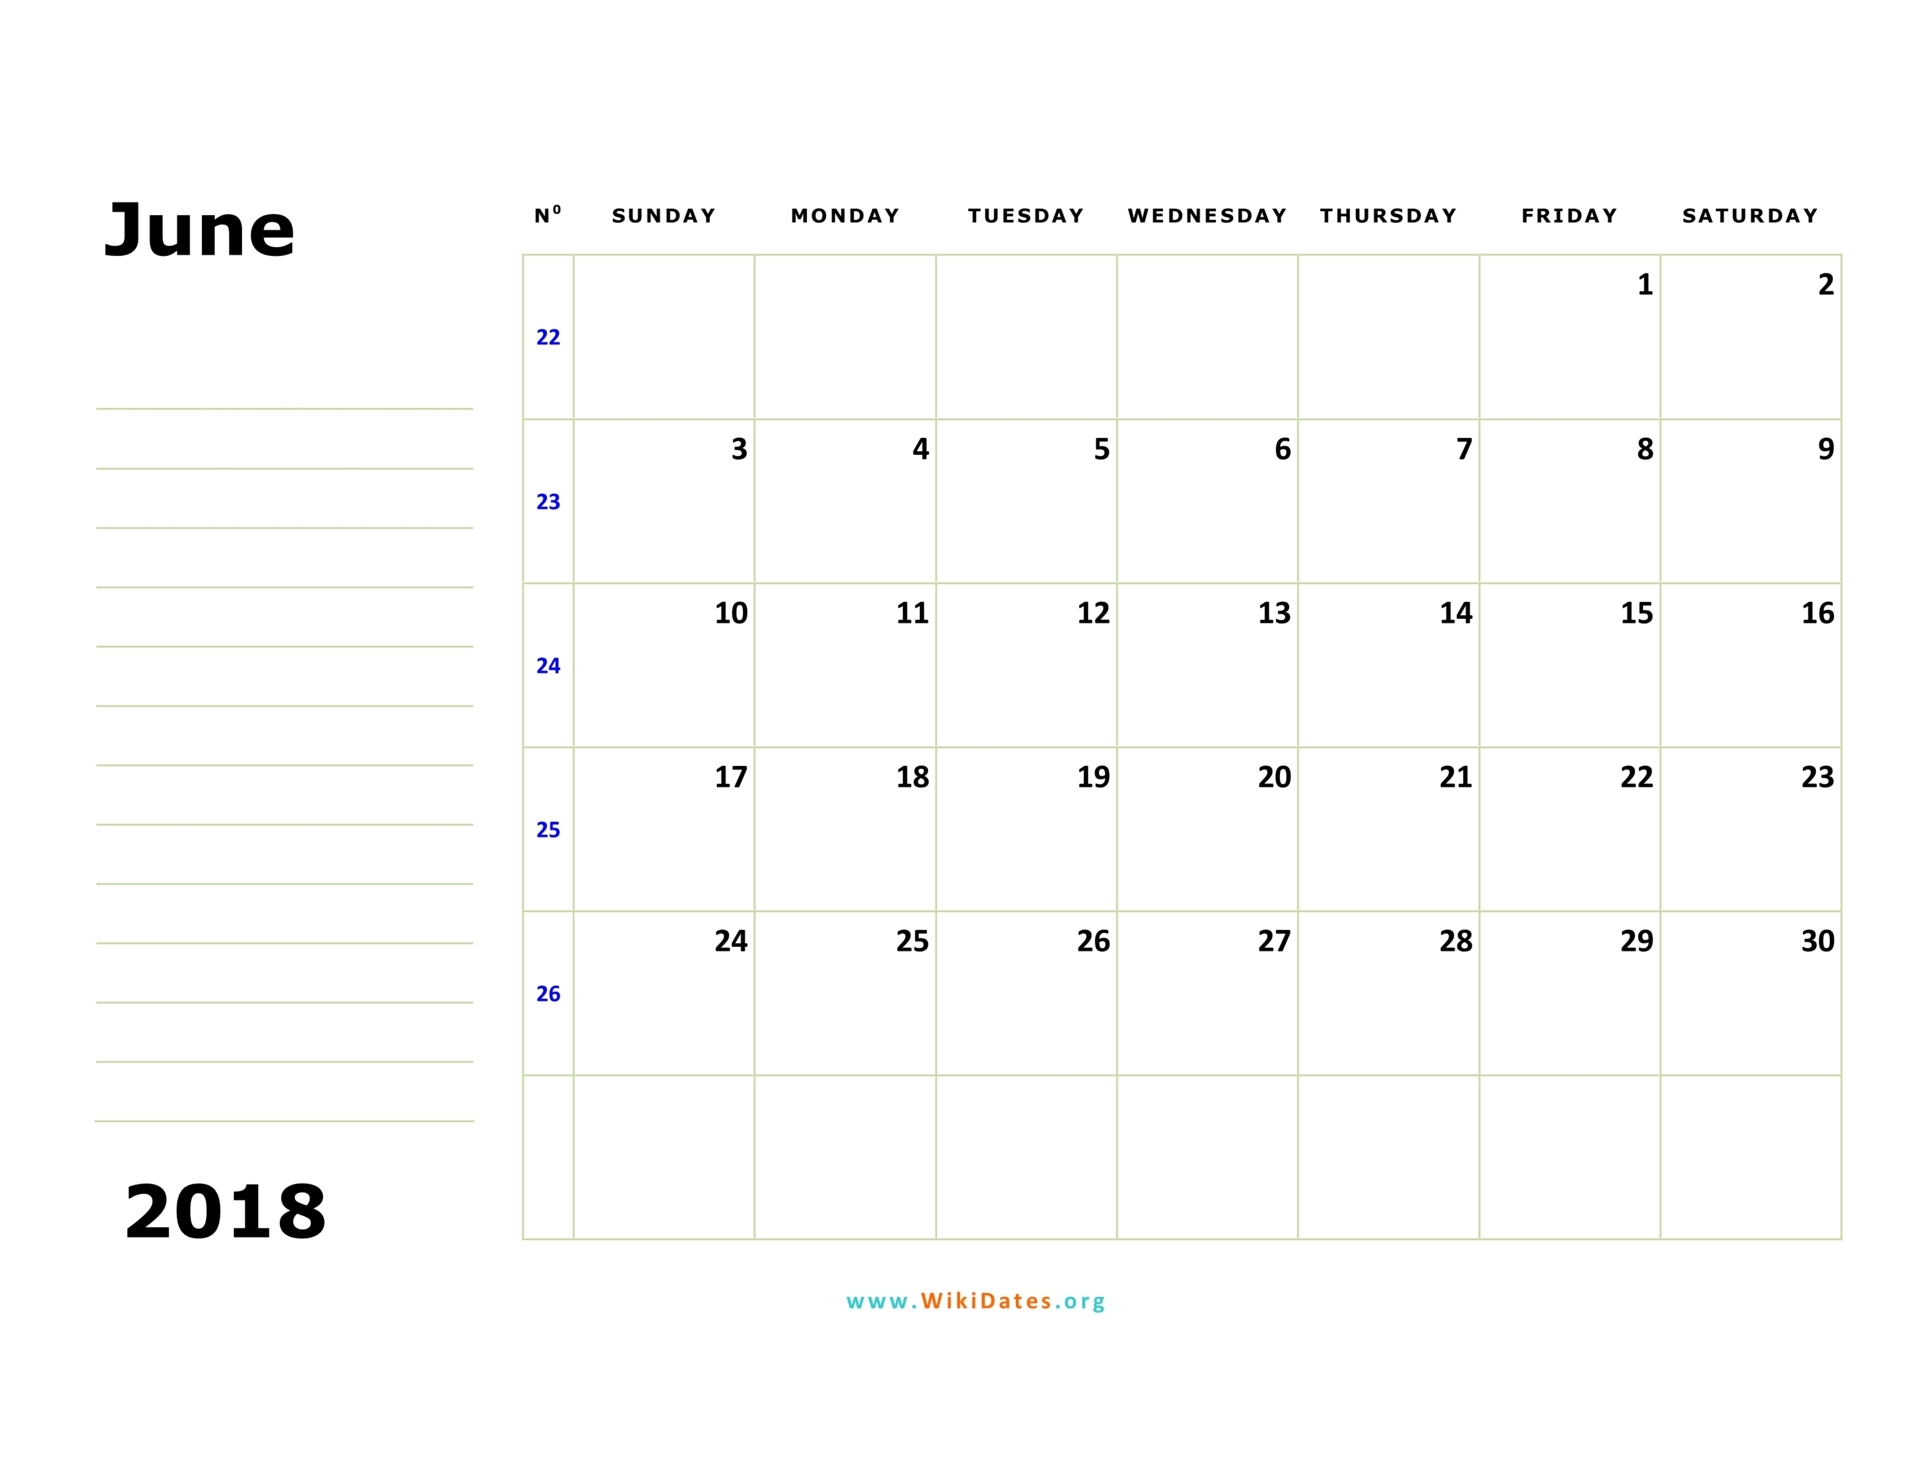 june-2018-calendar-wikidates